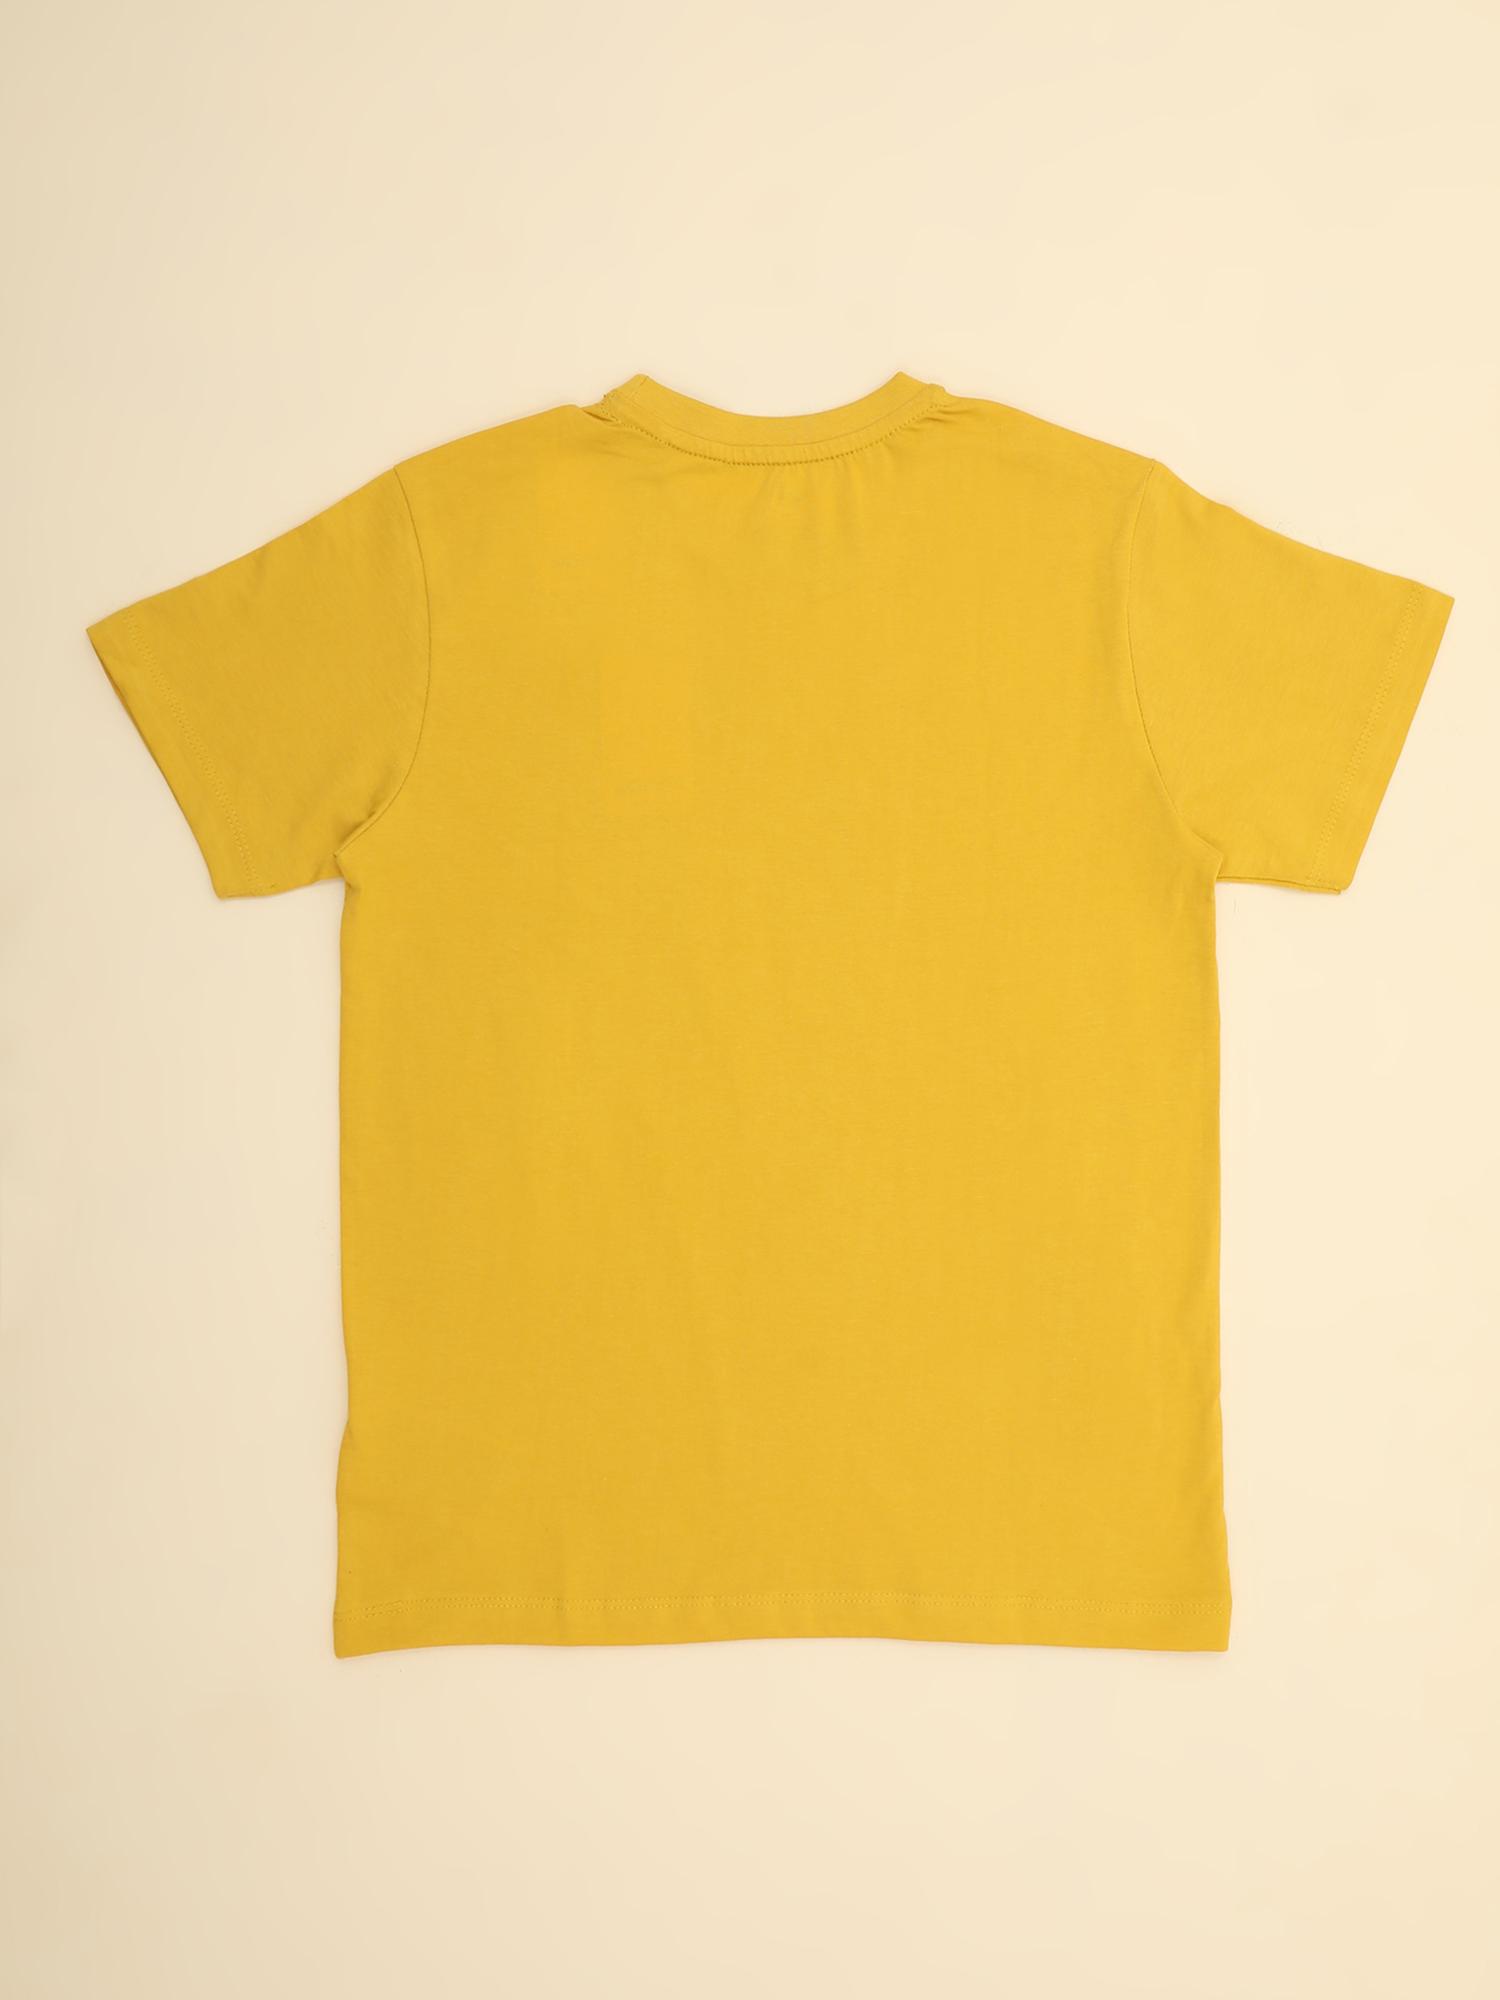 BYOStyle Boys Cotton Tshirt Printed-Yellow